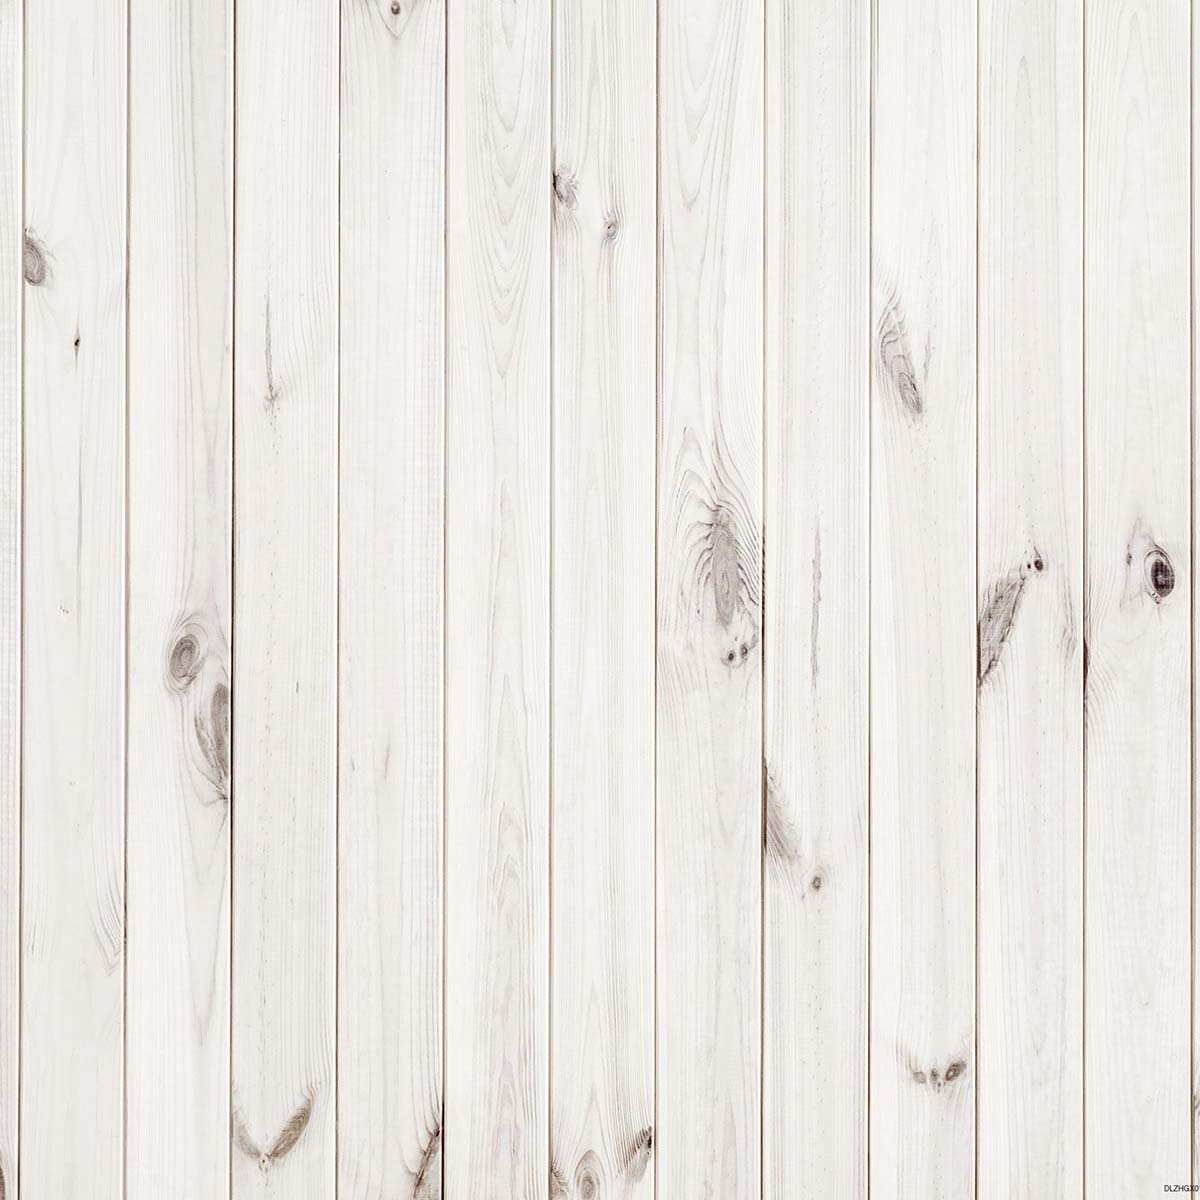 Fox White Wood Rubber Mat Flooring for Newborn Photos - Foxbackdrop